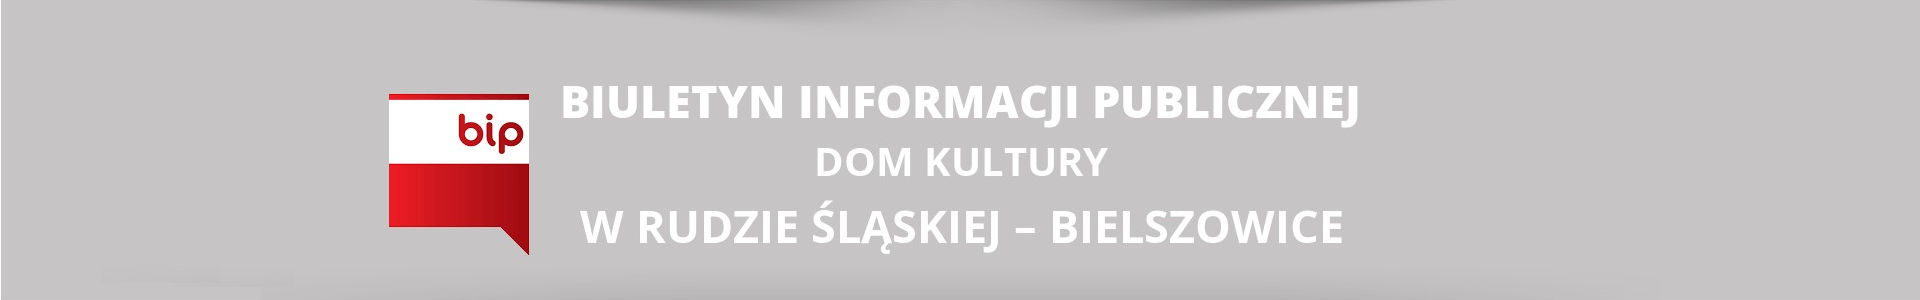 biuletyn-informacji-publicznej-pasek